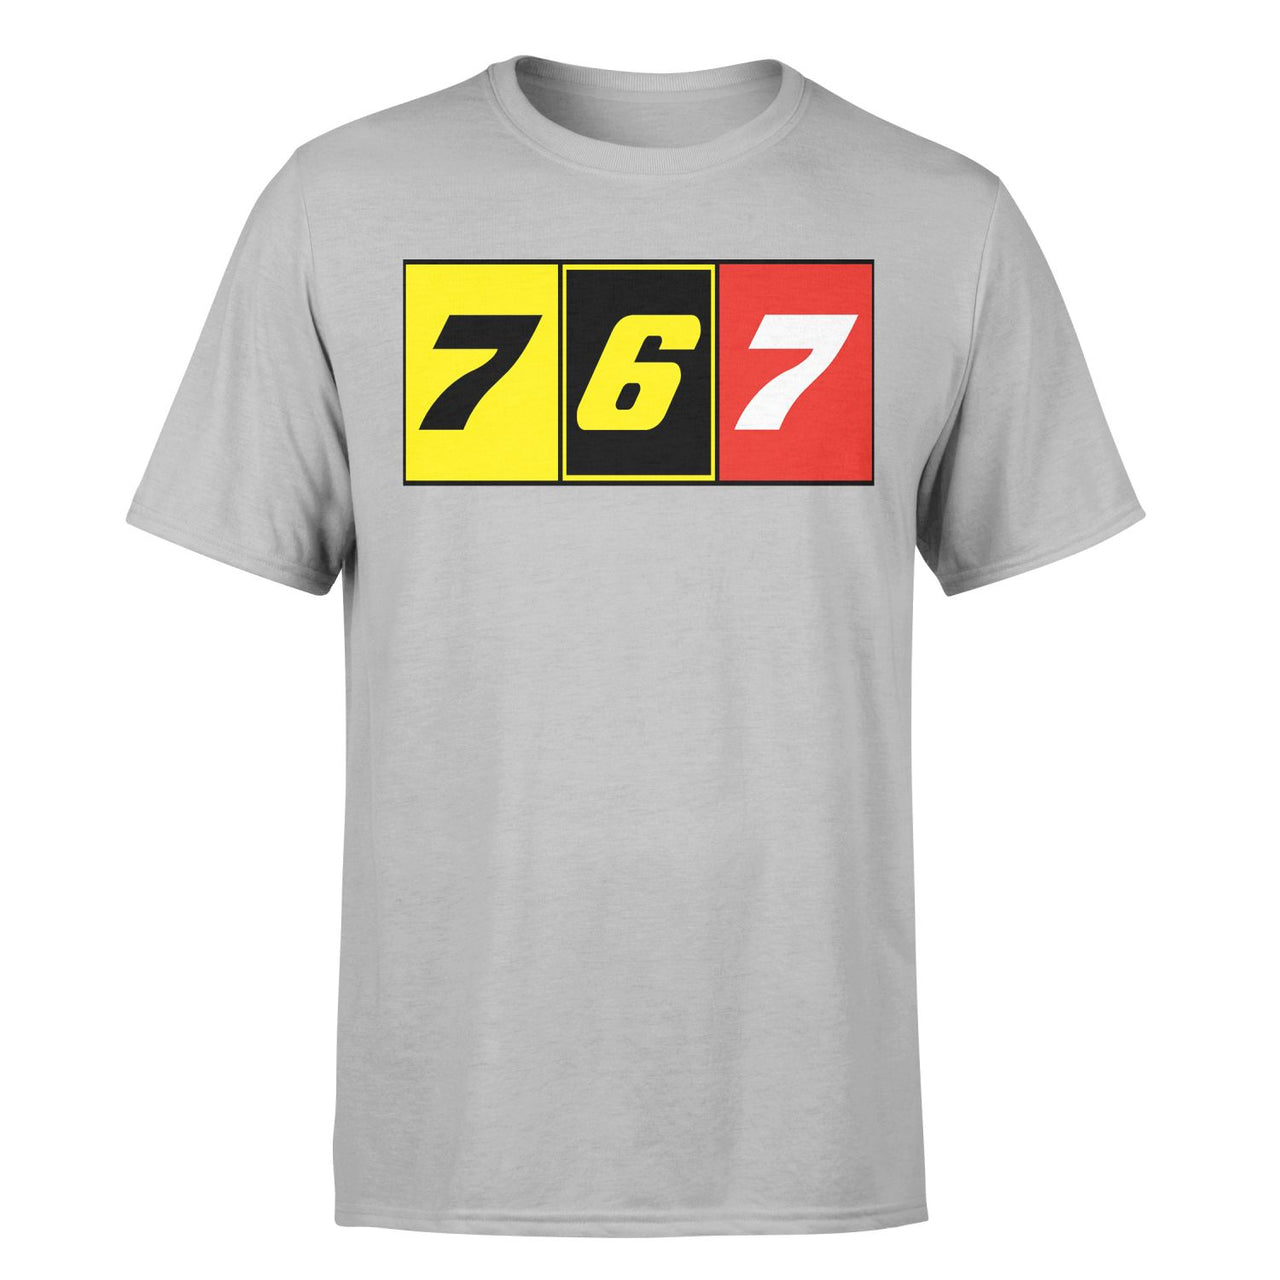 Flat Colourful 767 Designed T-Shirts